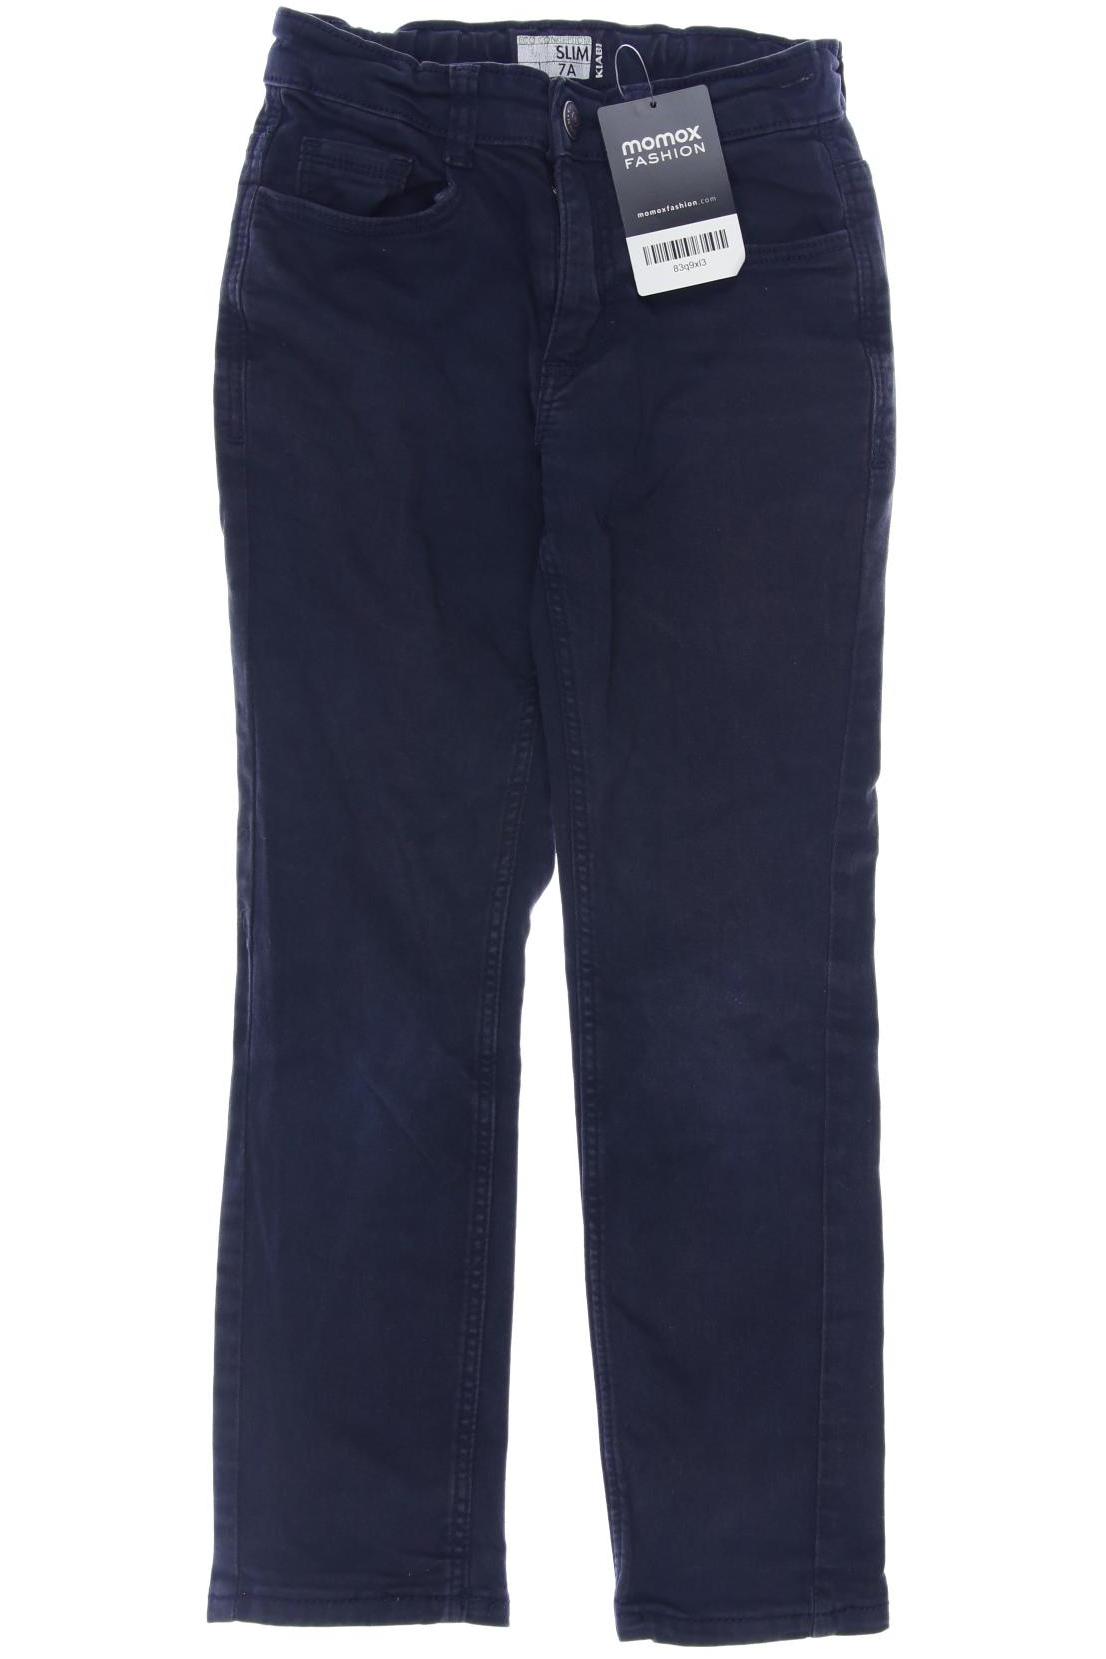 Kiabi Jungen Jeans, marineblau von Kiabi